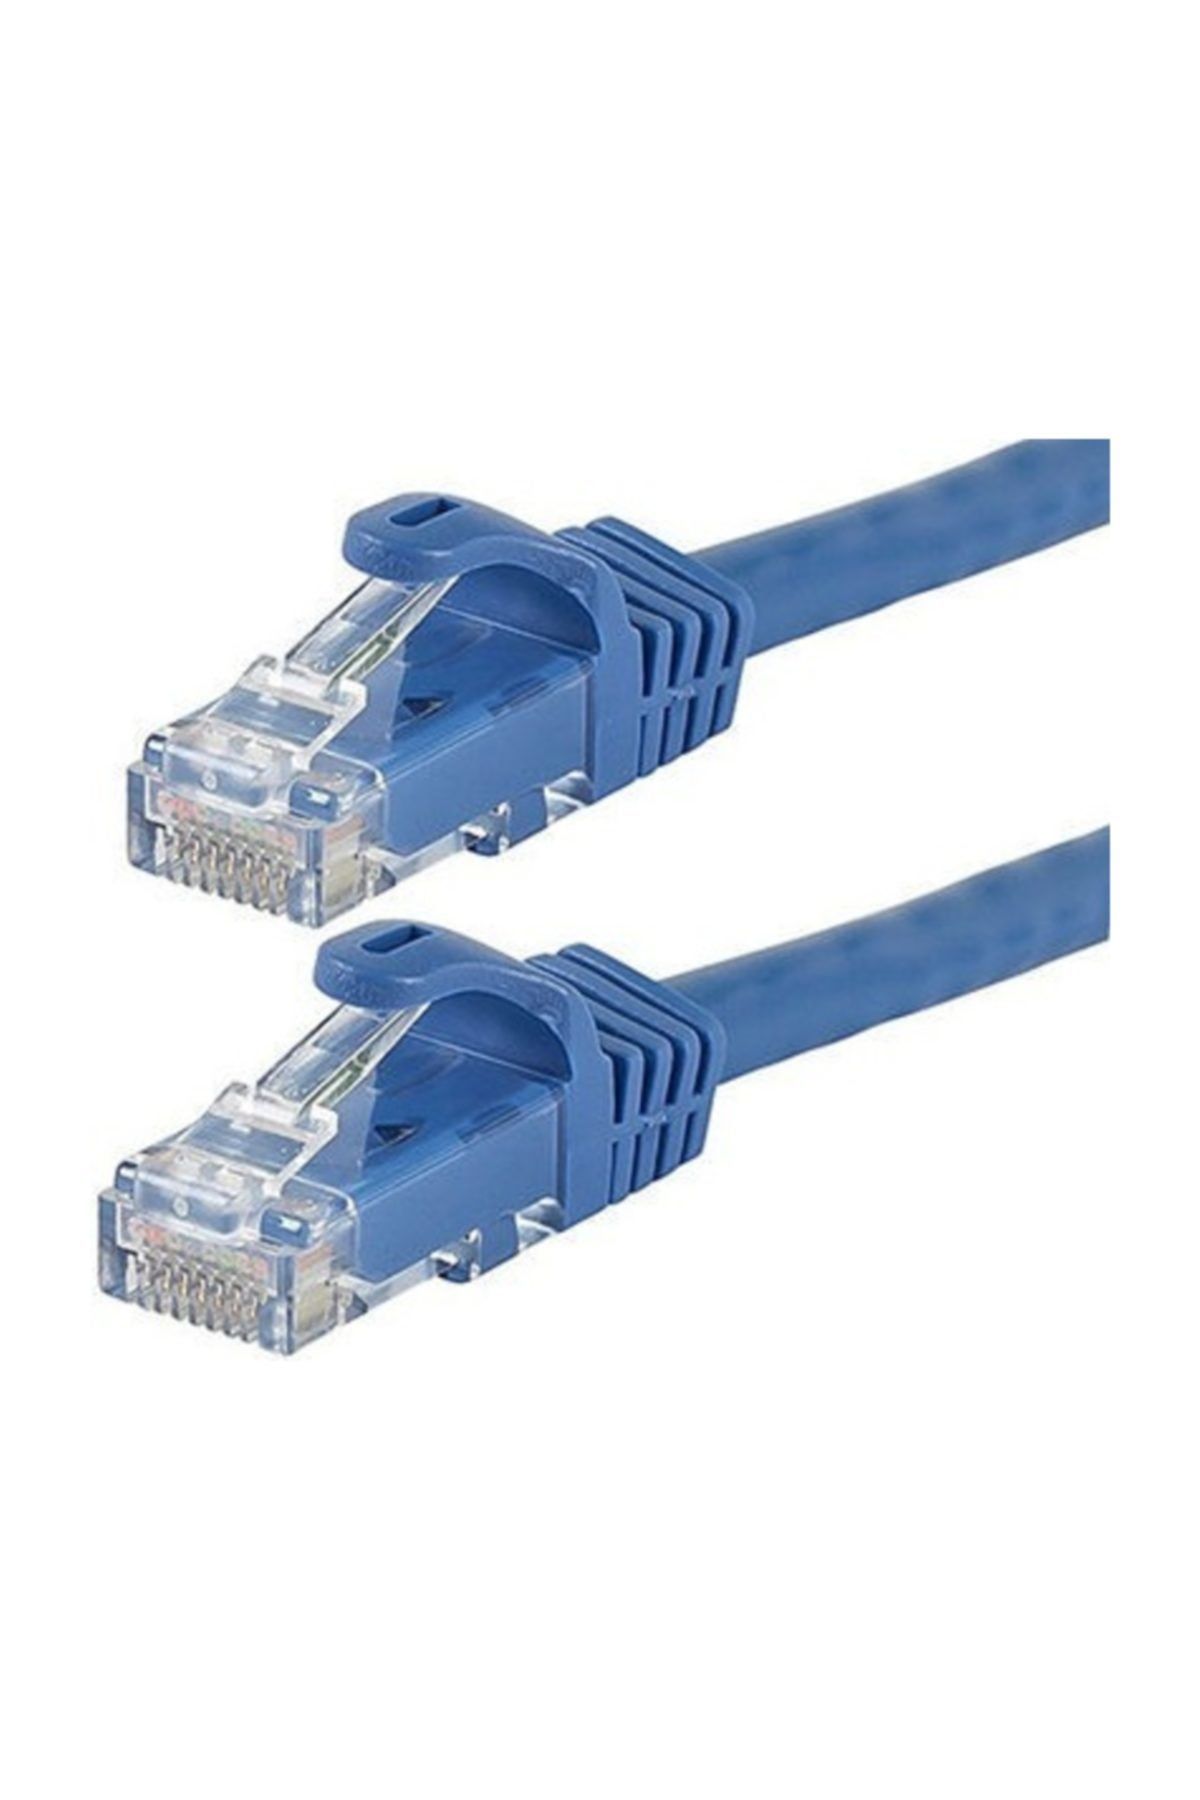 Alfais 4938 Cat6 Internet Ethernet Rj45 Lan Kablosu 2 metre